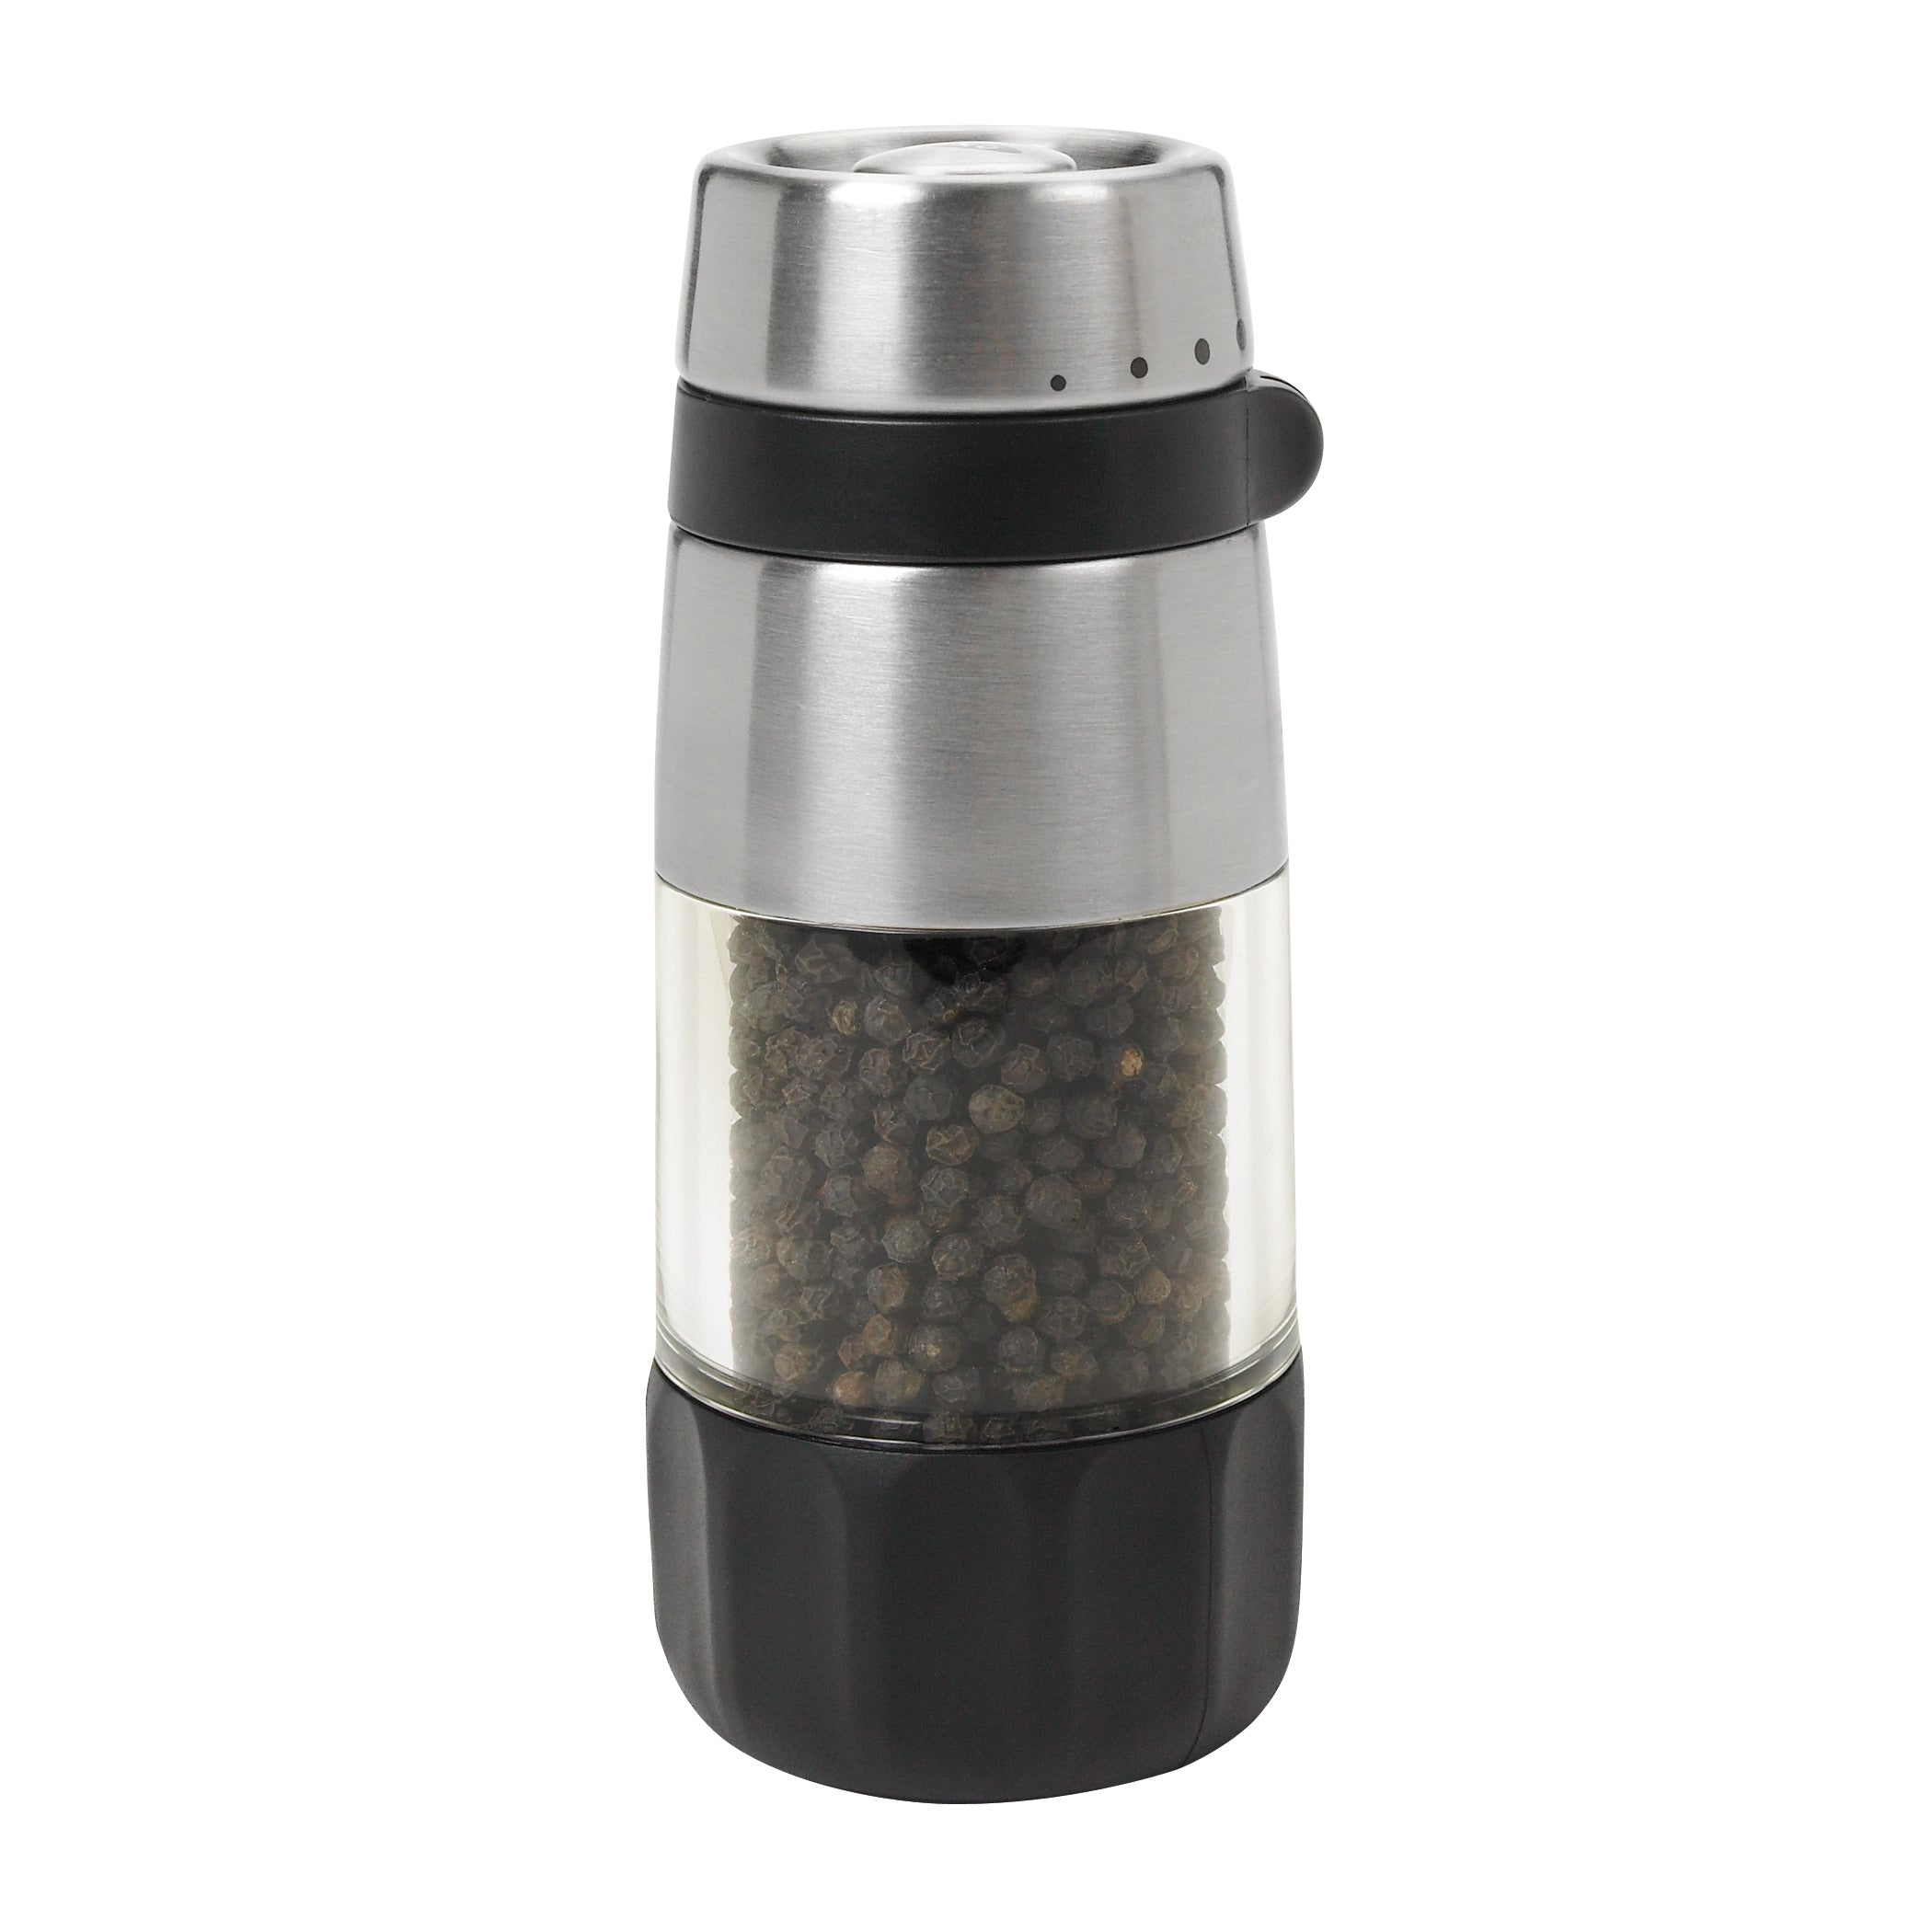 OXO Good Grips Top Dispensing Salt and Pepper Grinder Set in Black